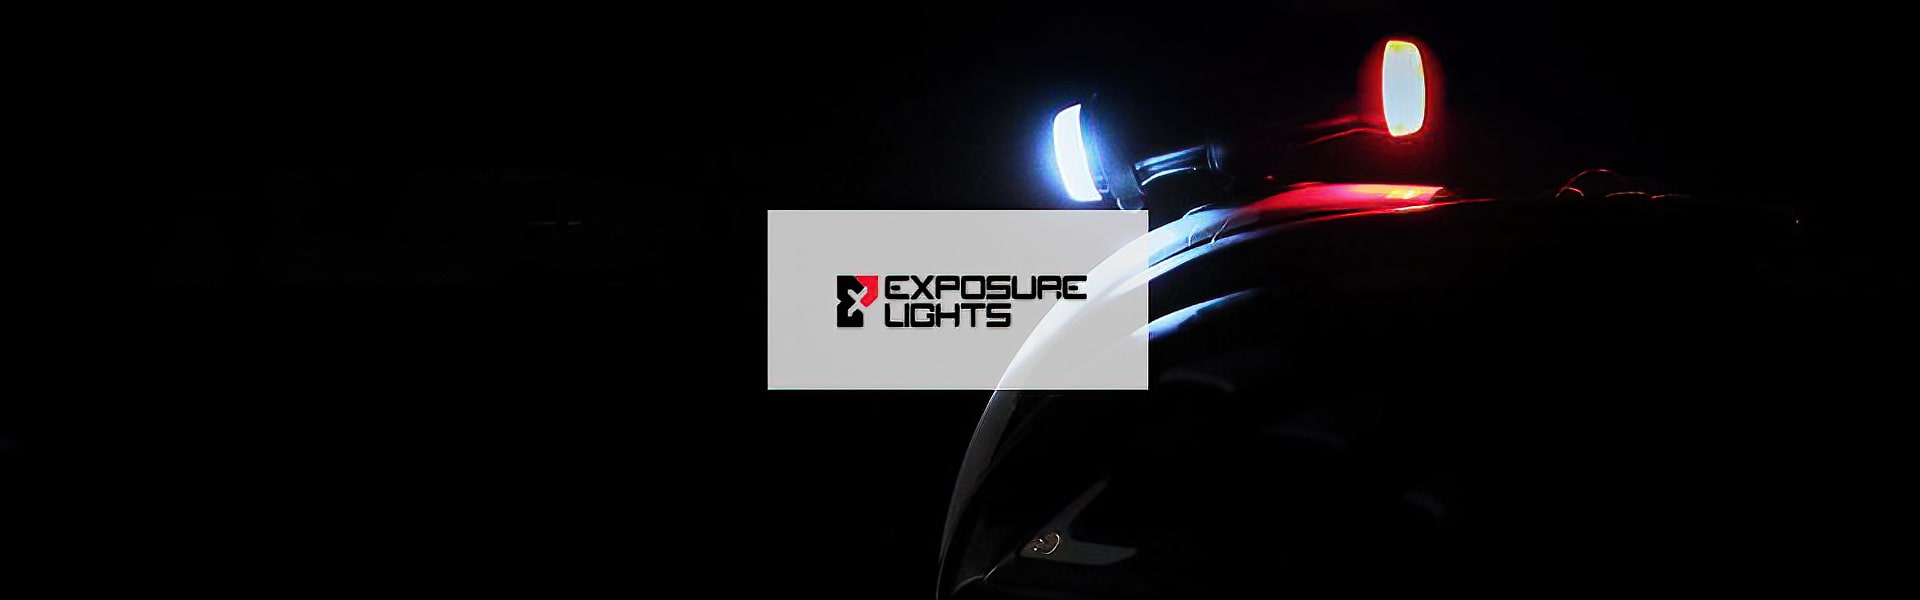 brandbanner exposurelights